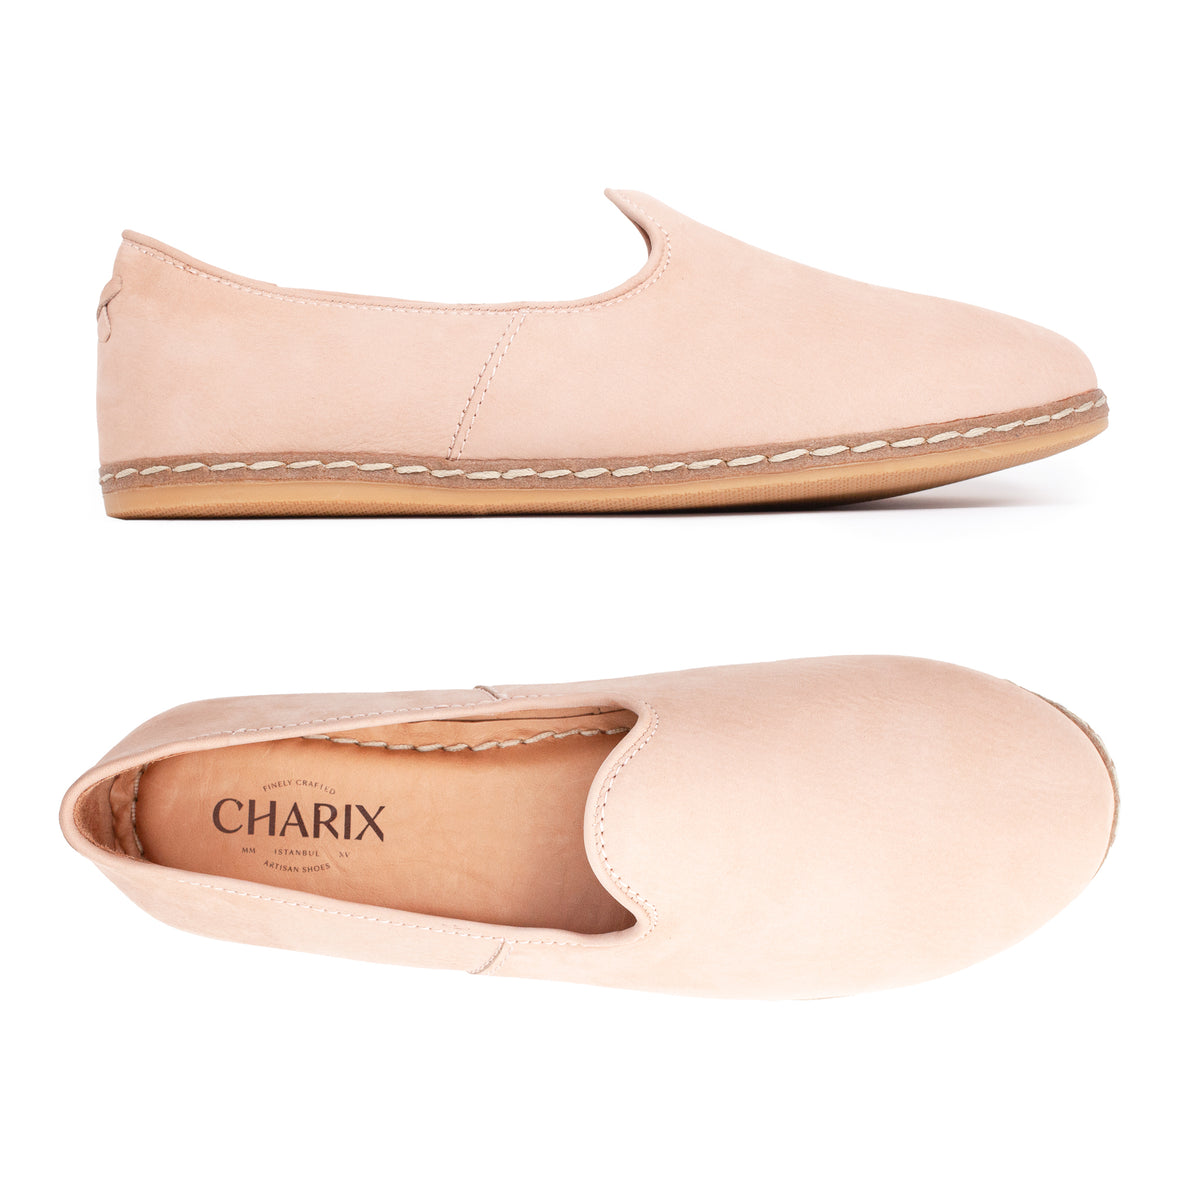 Safari - Men's - Charix Shoes